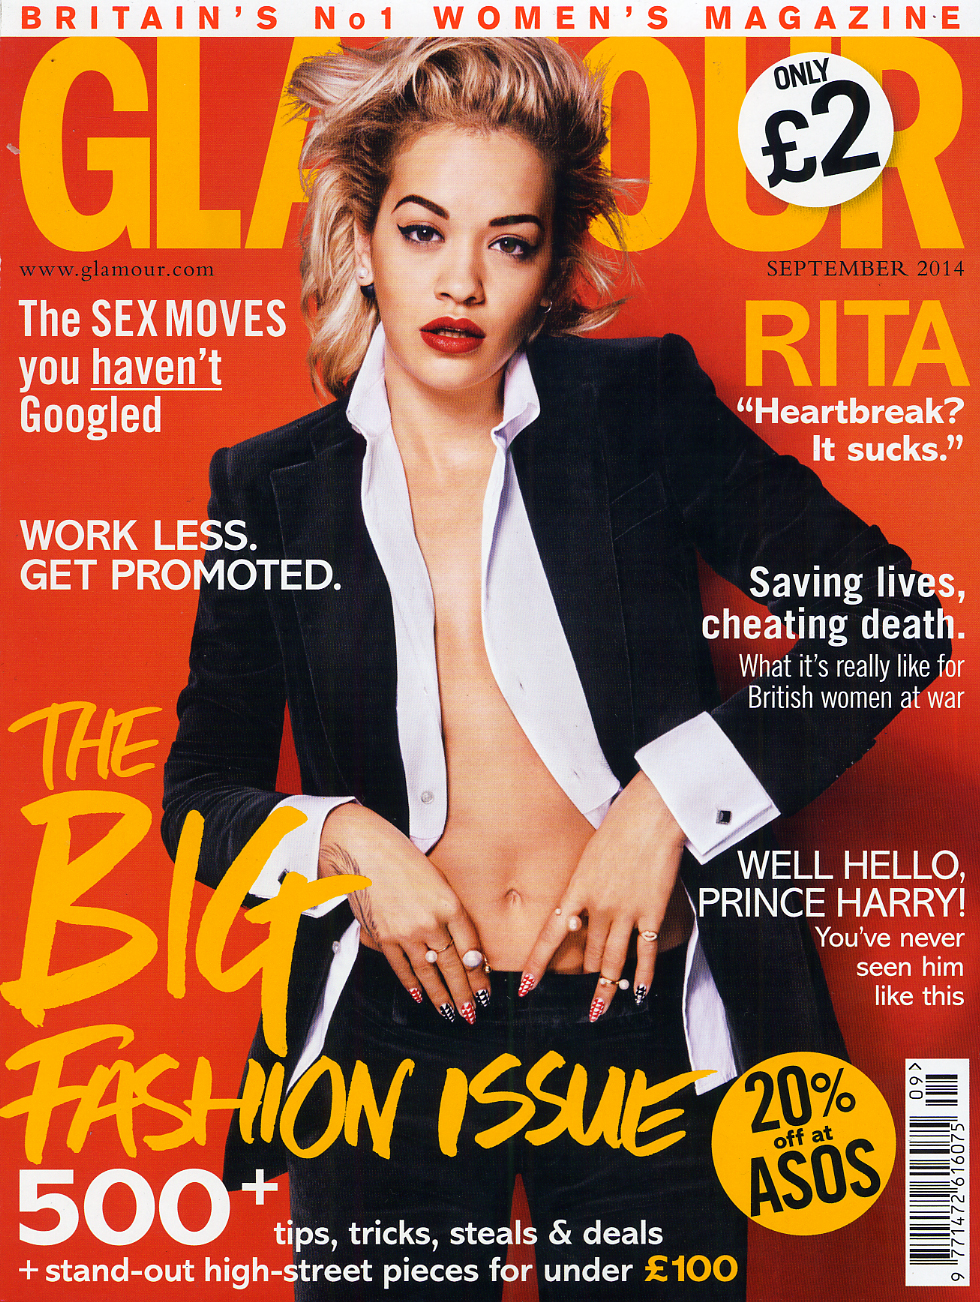 Glamour Cover Sep 14 .jpg